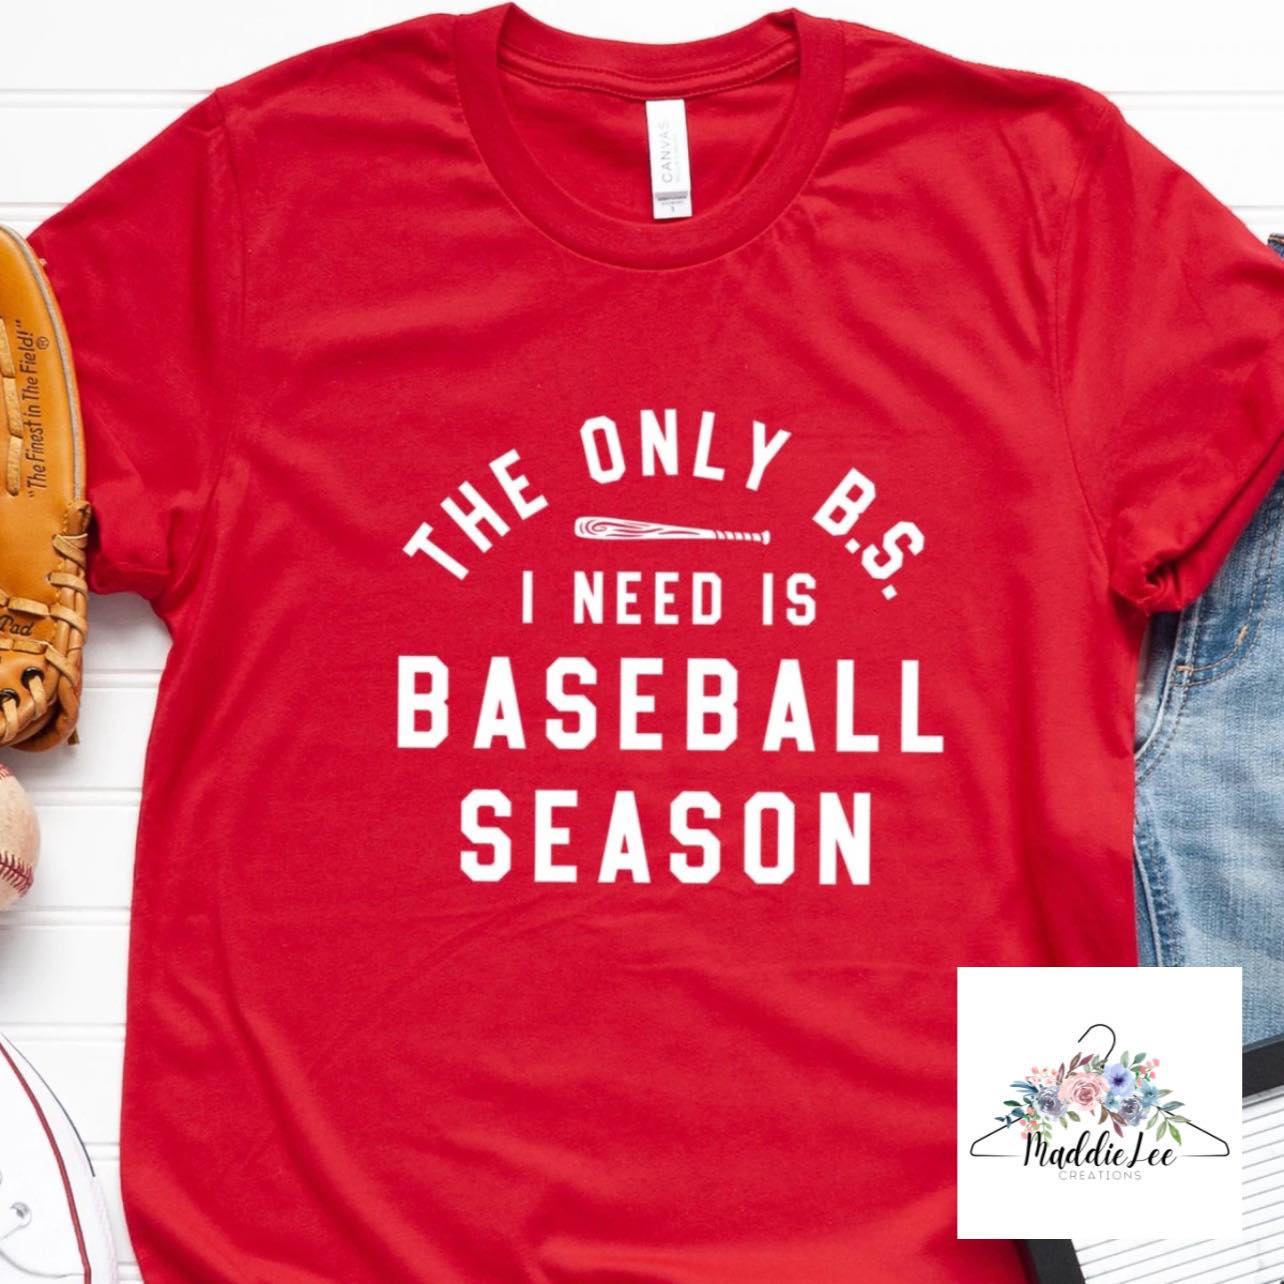 Only BS is Baseball Season